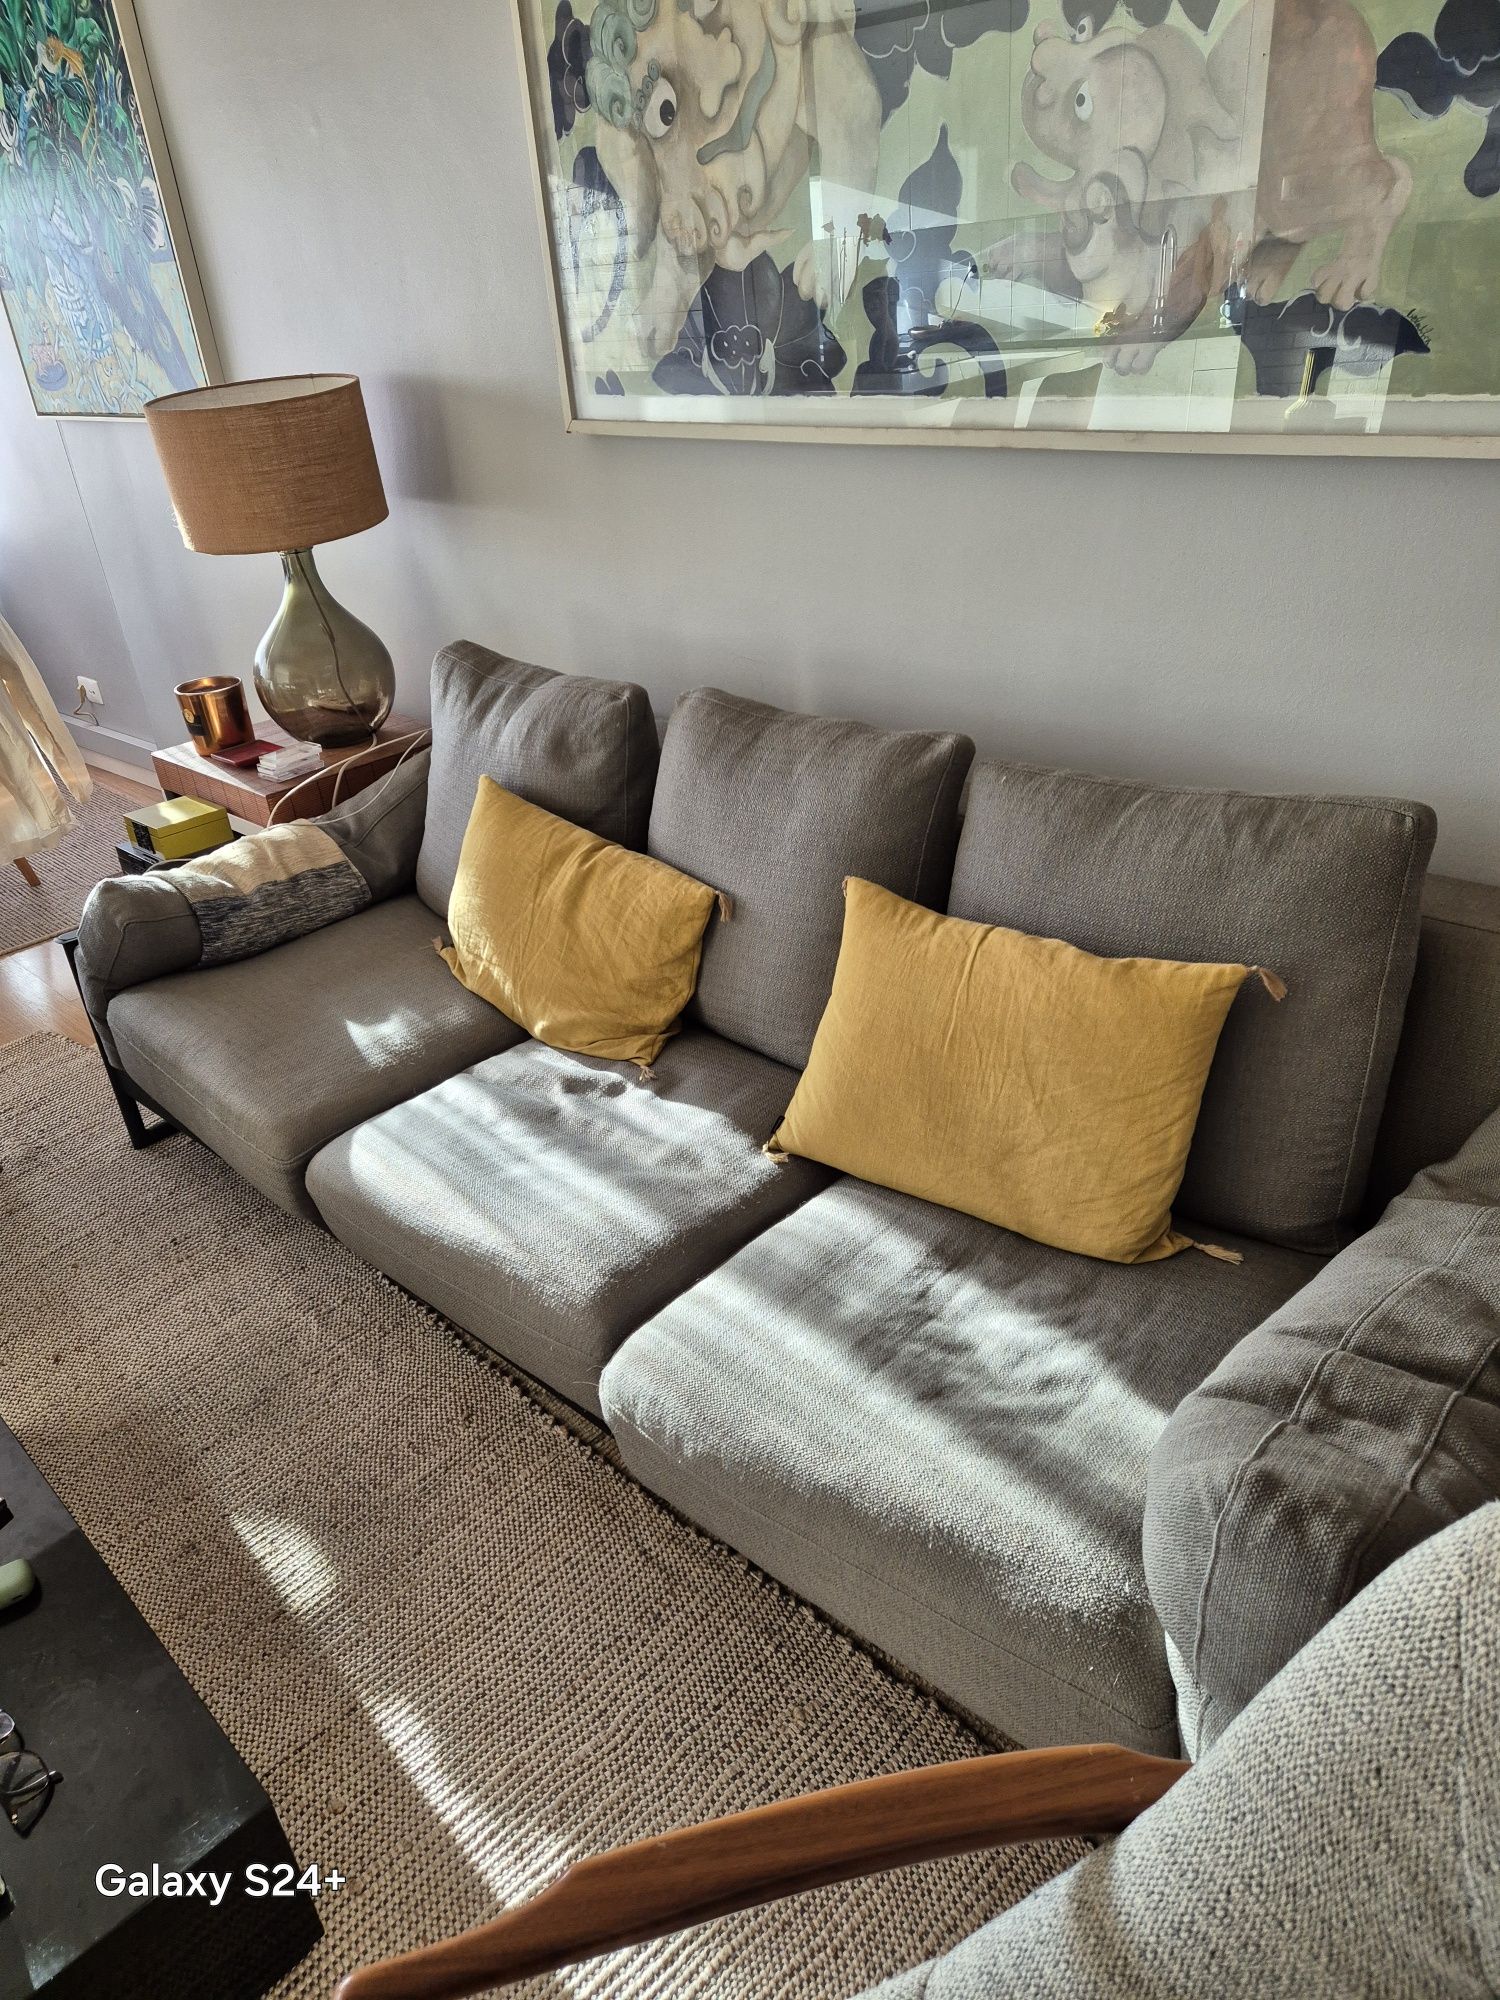 Vendo sofa 2m20 cinza da area 3 lugares  350 euros